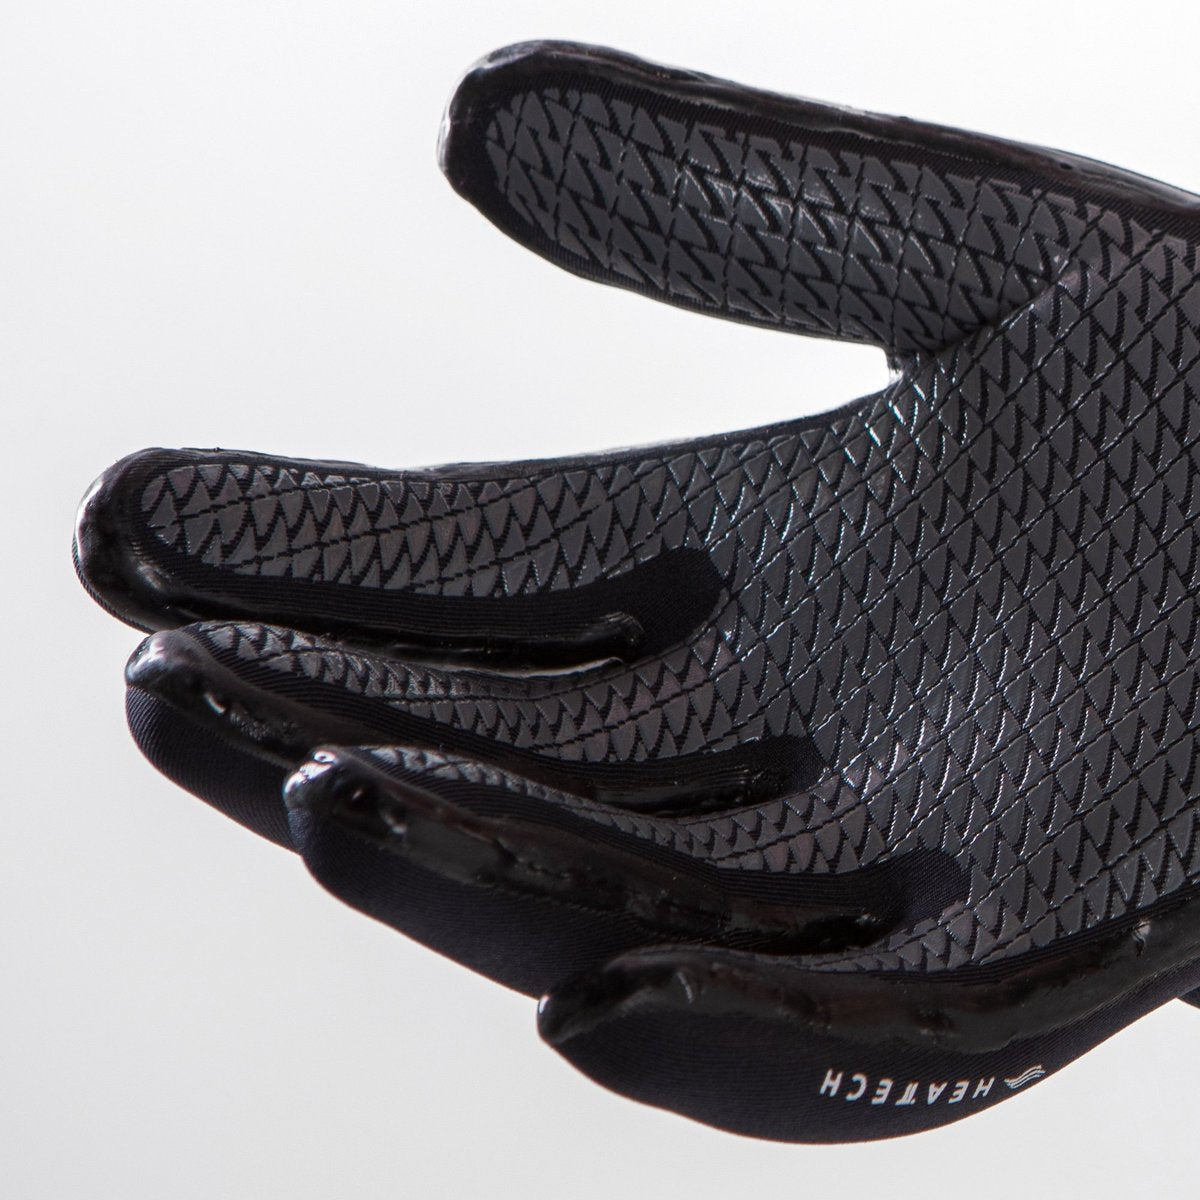 Zone 3 - Neoprene Heat-Tech Warmth Swim Gloves